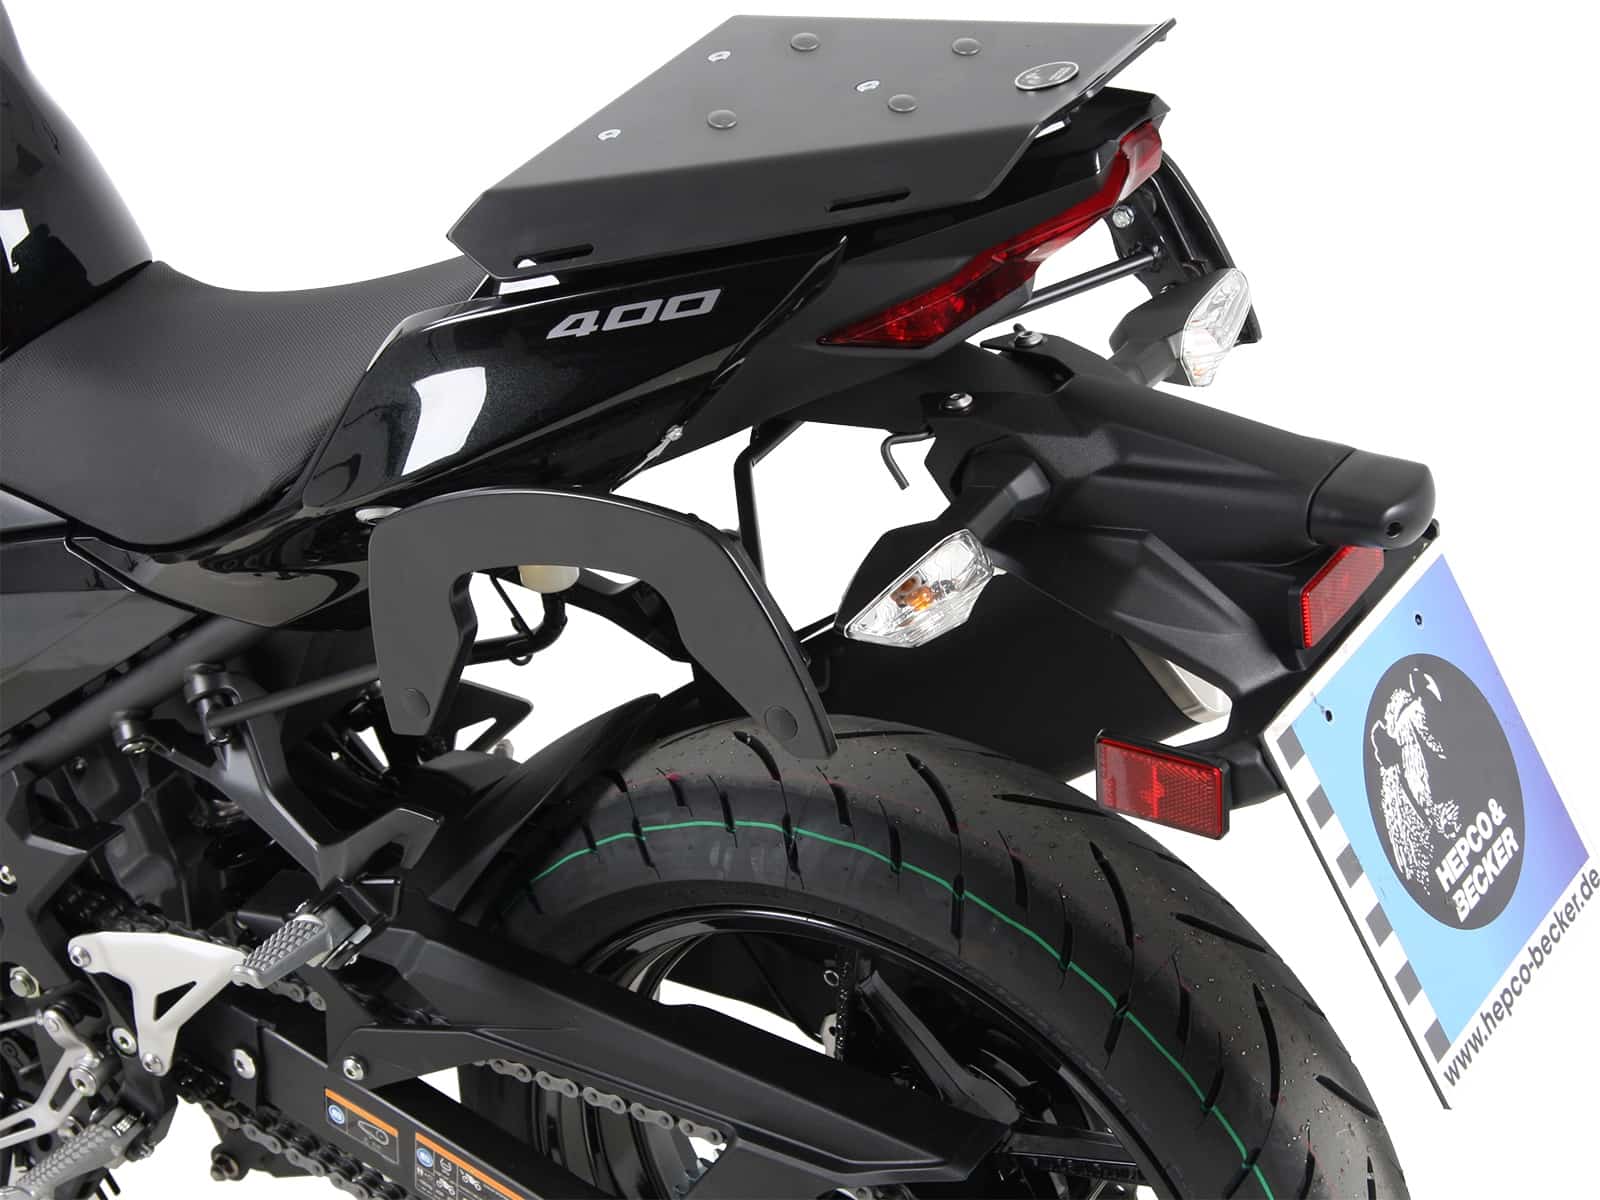 ETbotu Support latéral Professionnel en Aluminium CNC pour Moto Kawasaki NINJA400 